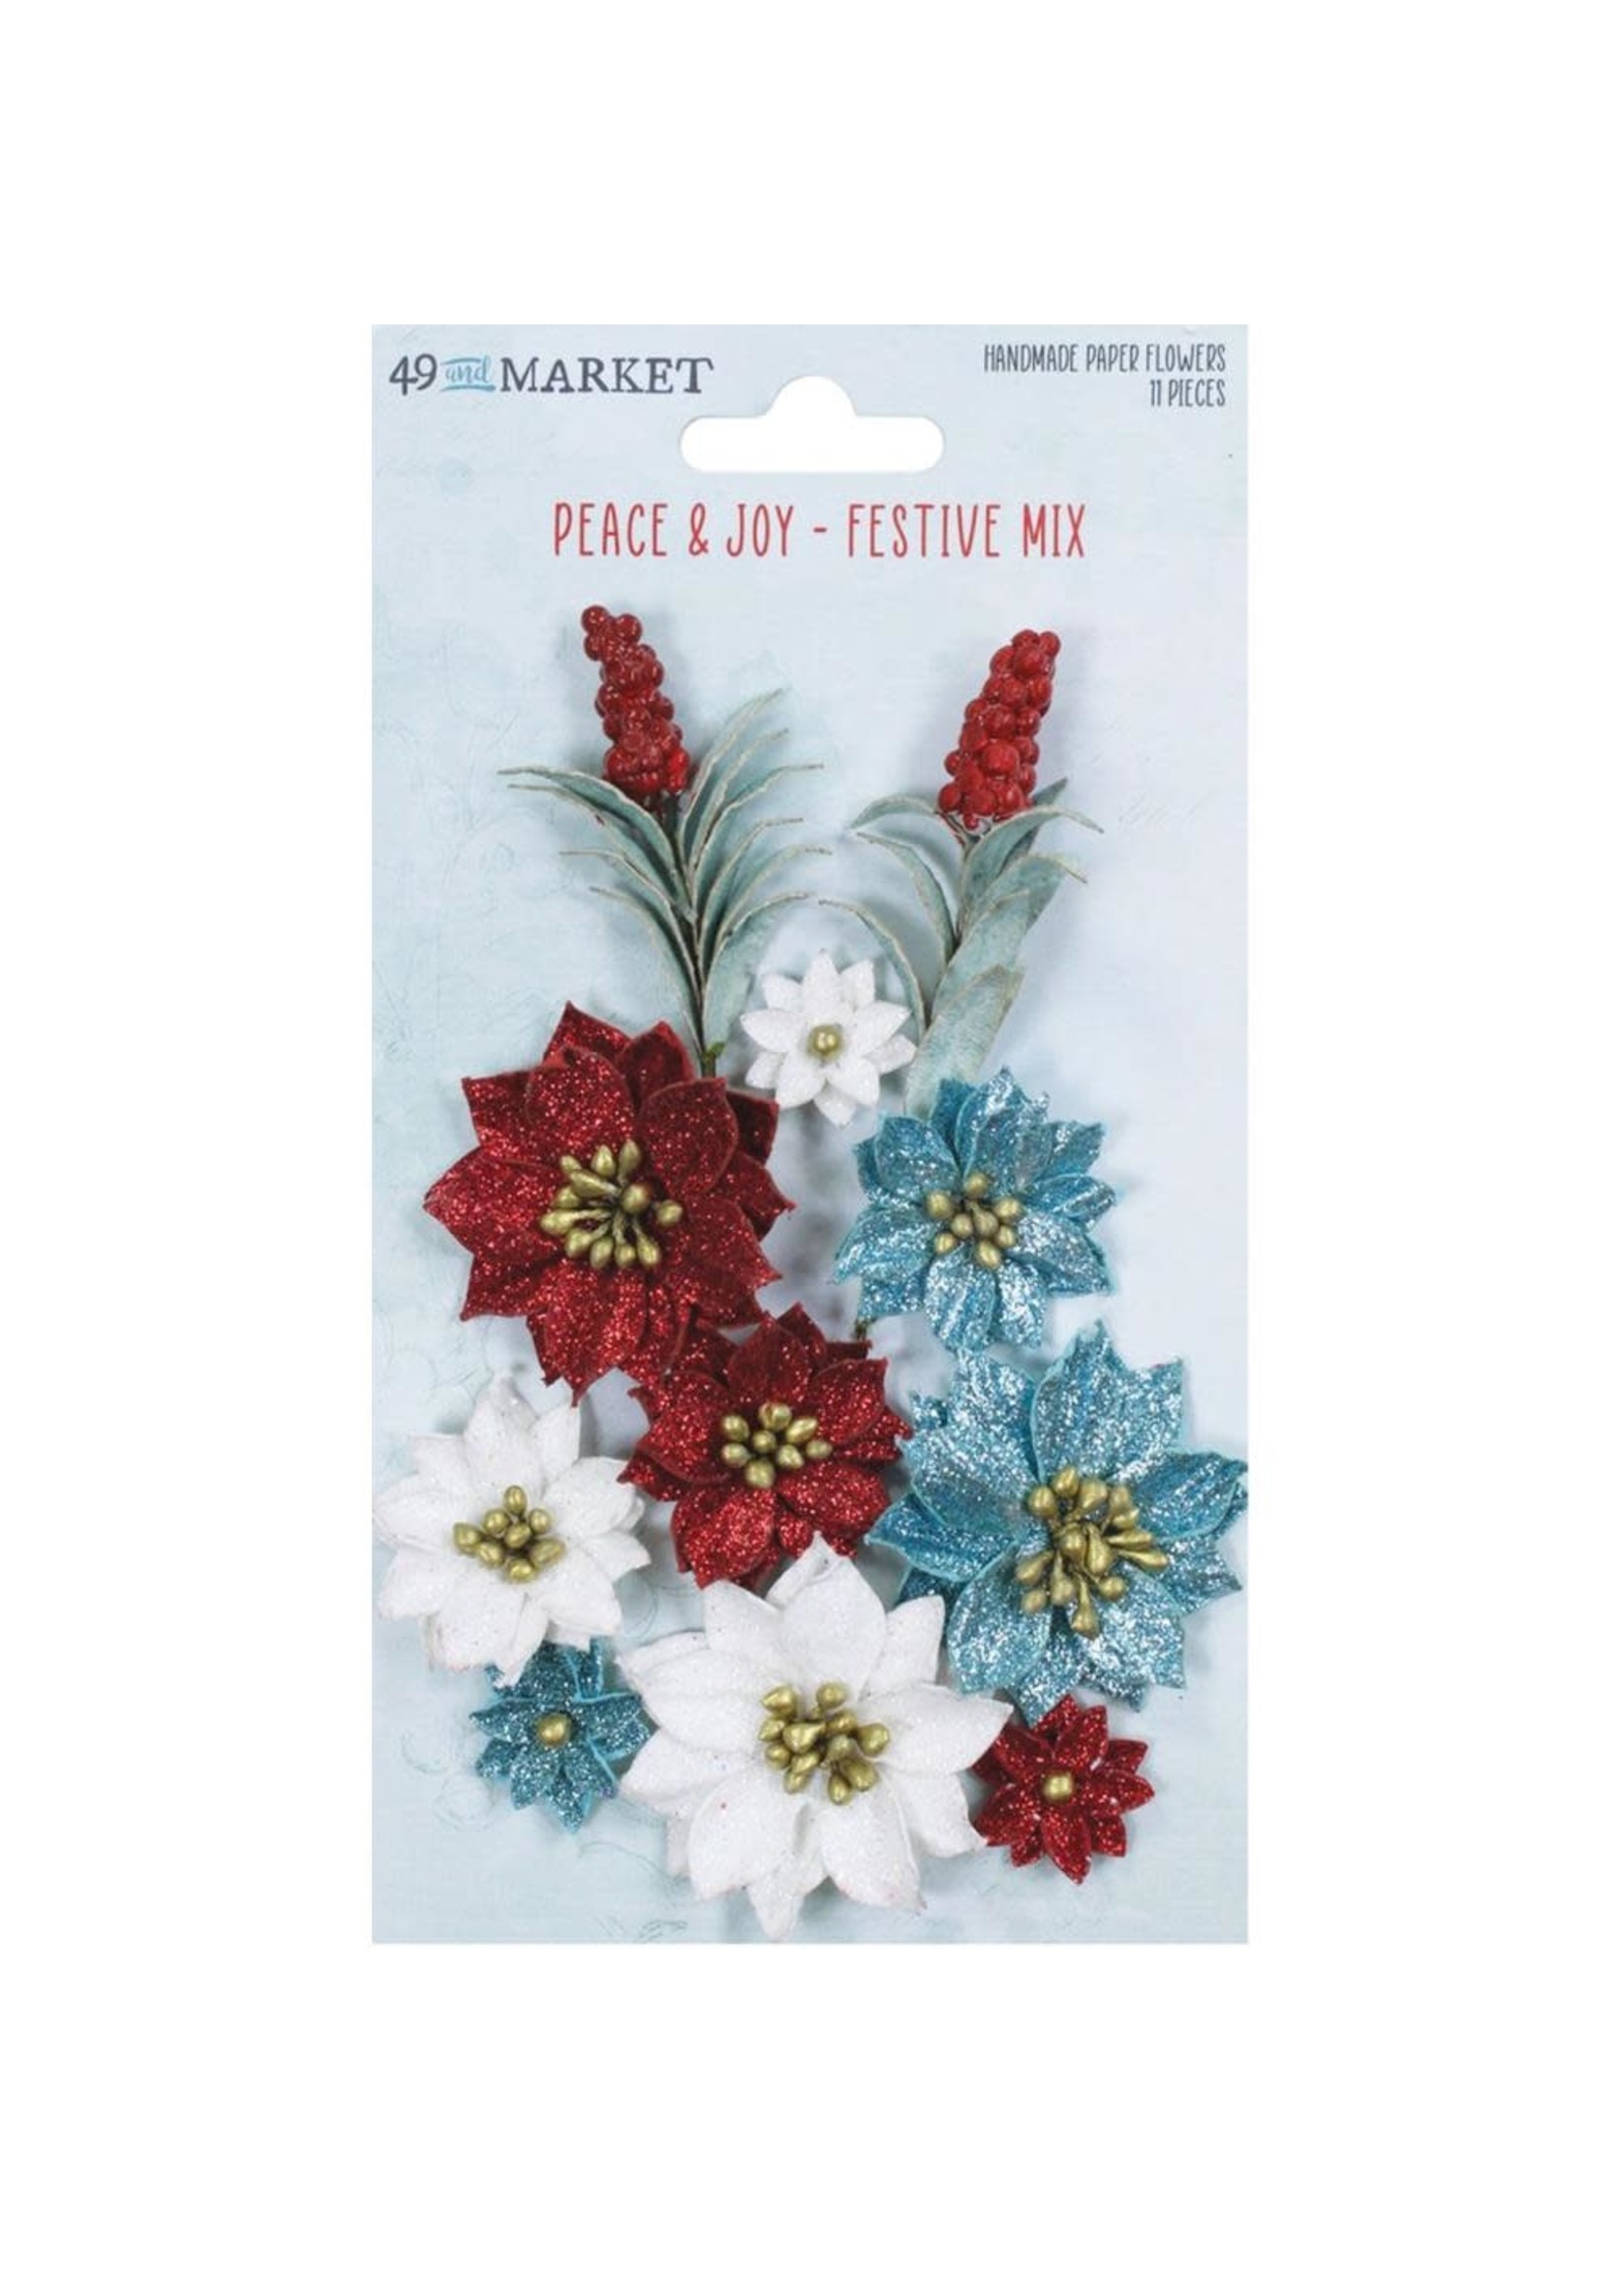 49 and Market Peace & Joy: Festive Mix flowers